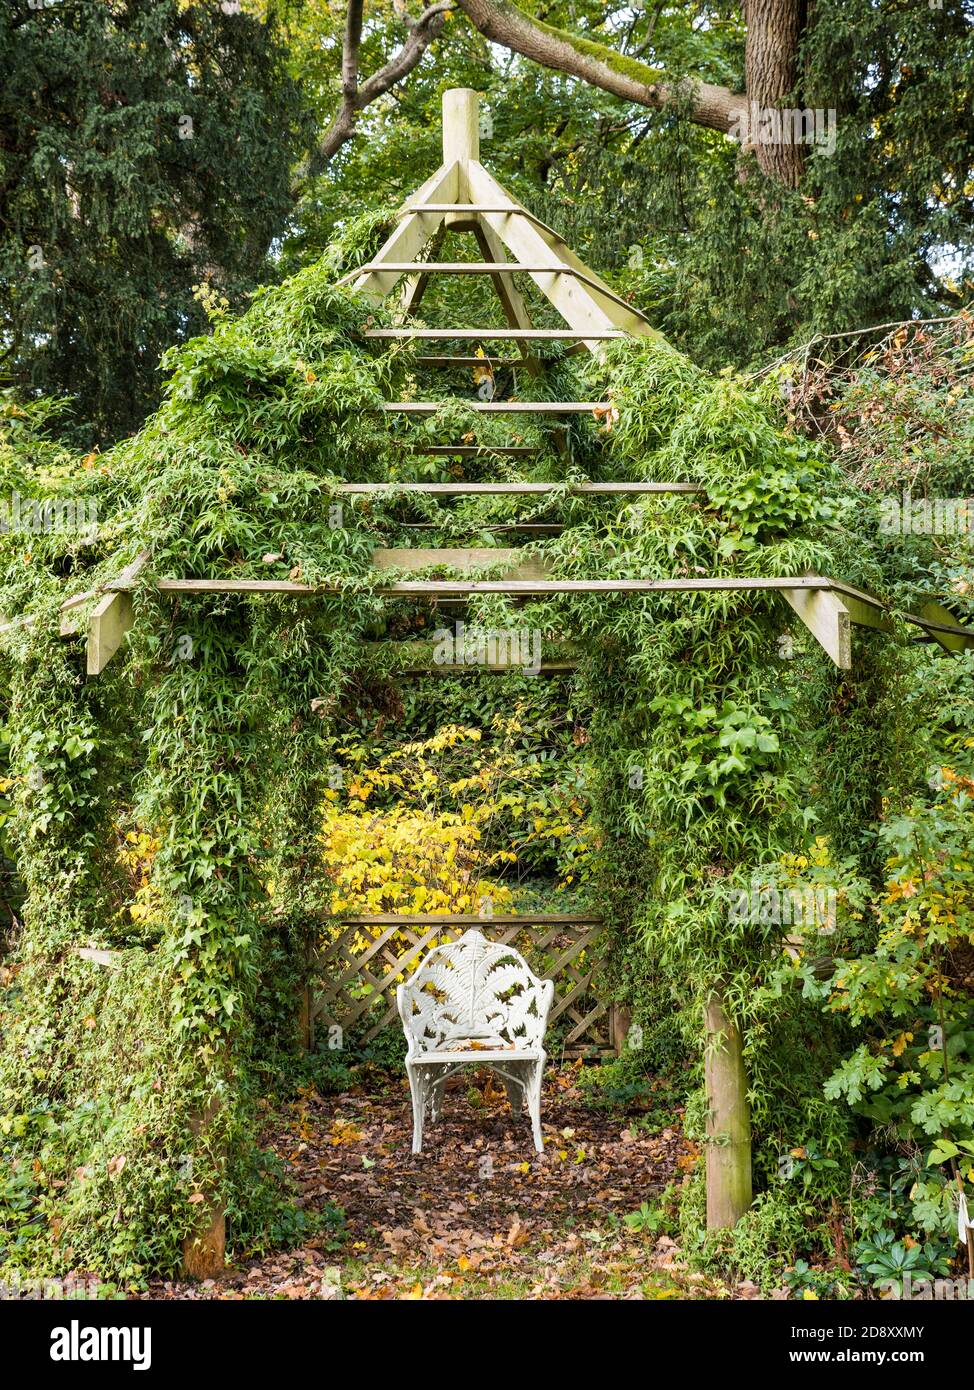 Country House Garden, Chair under Pagoda, Englefield House Gardens, Englefield, Thale, Reading, Berkshire, England, UK, GB. Stock Photo